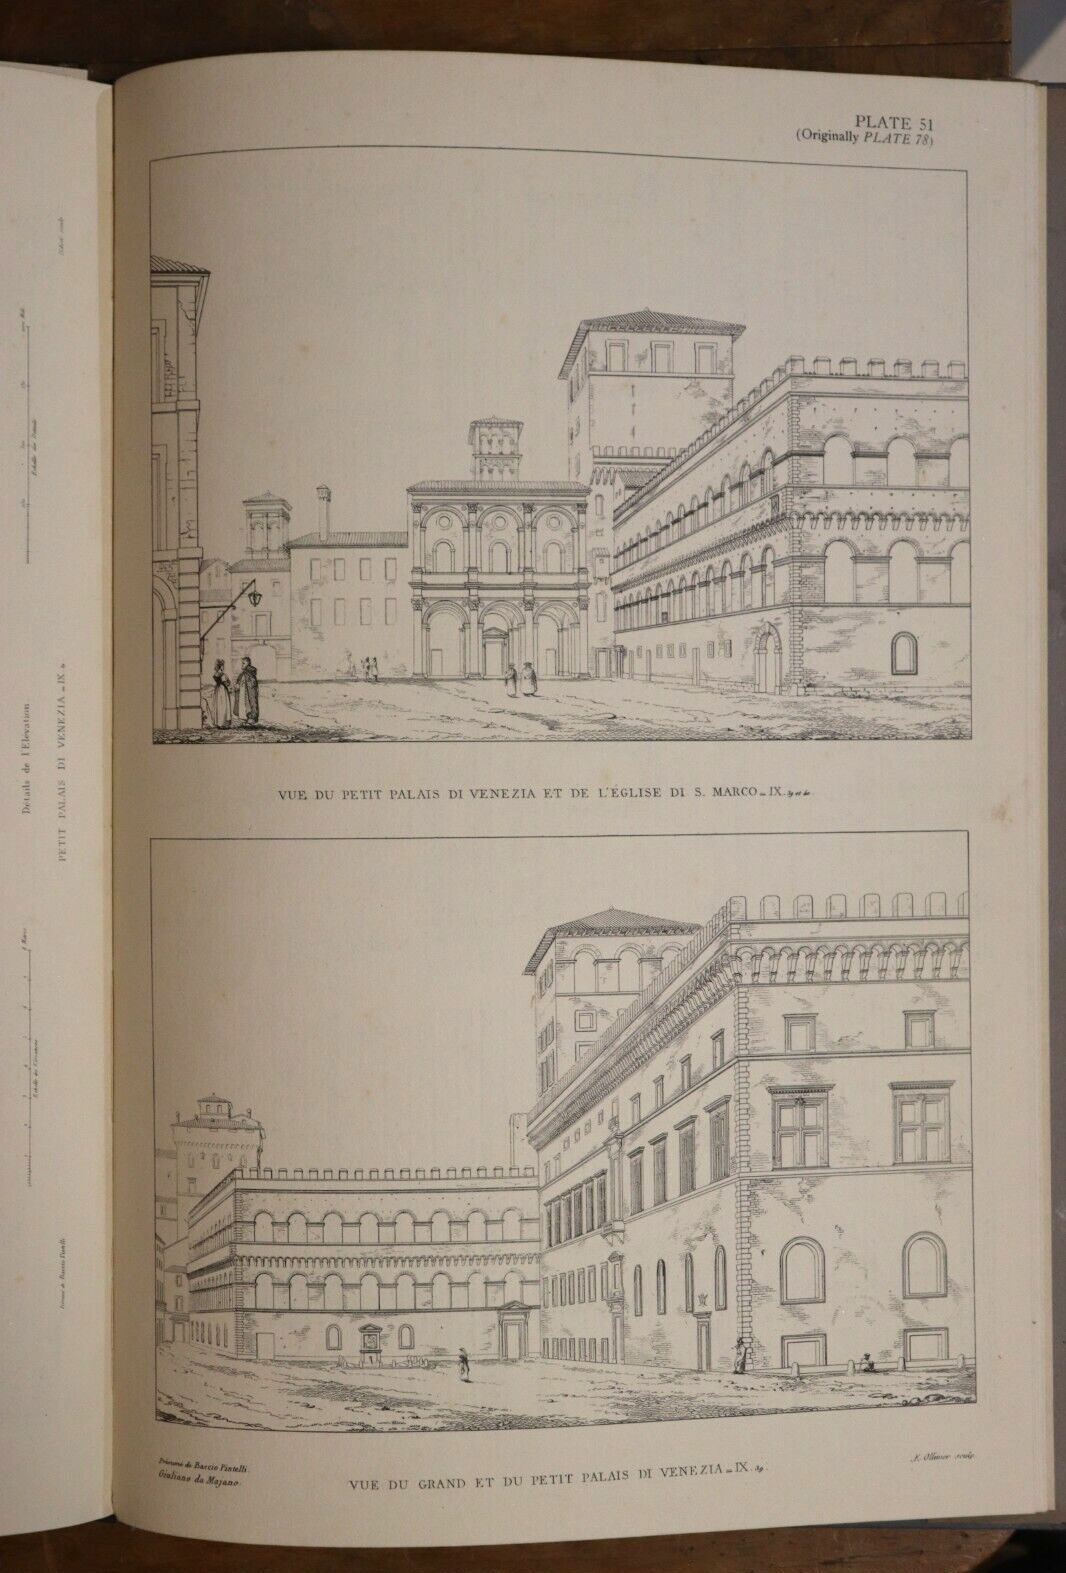 1928 4vol Edifices De Rome Moderne by Paul Letarouilly Architectural Books